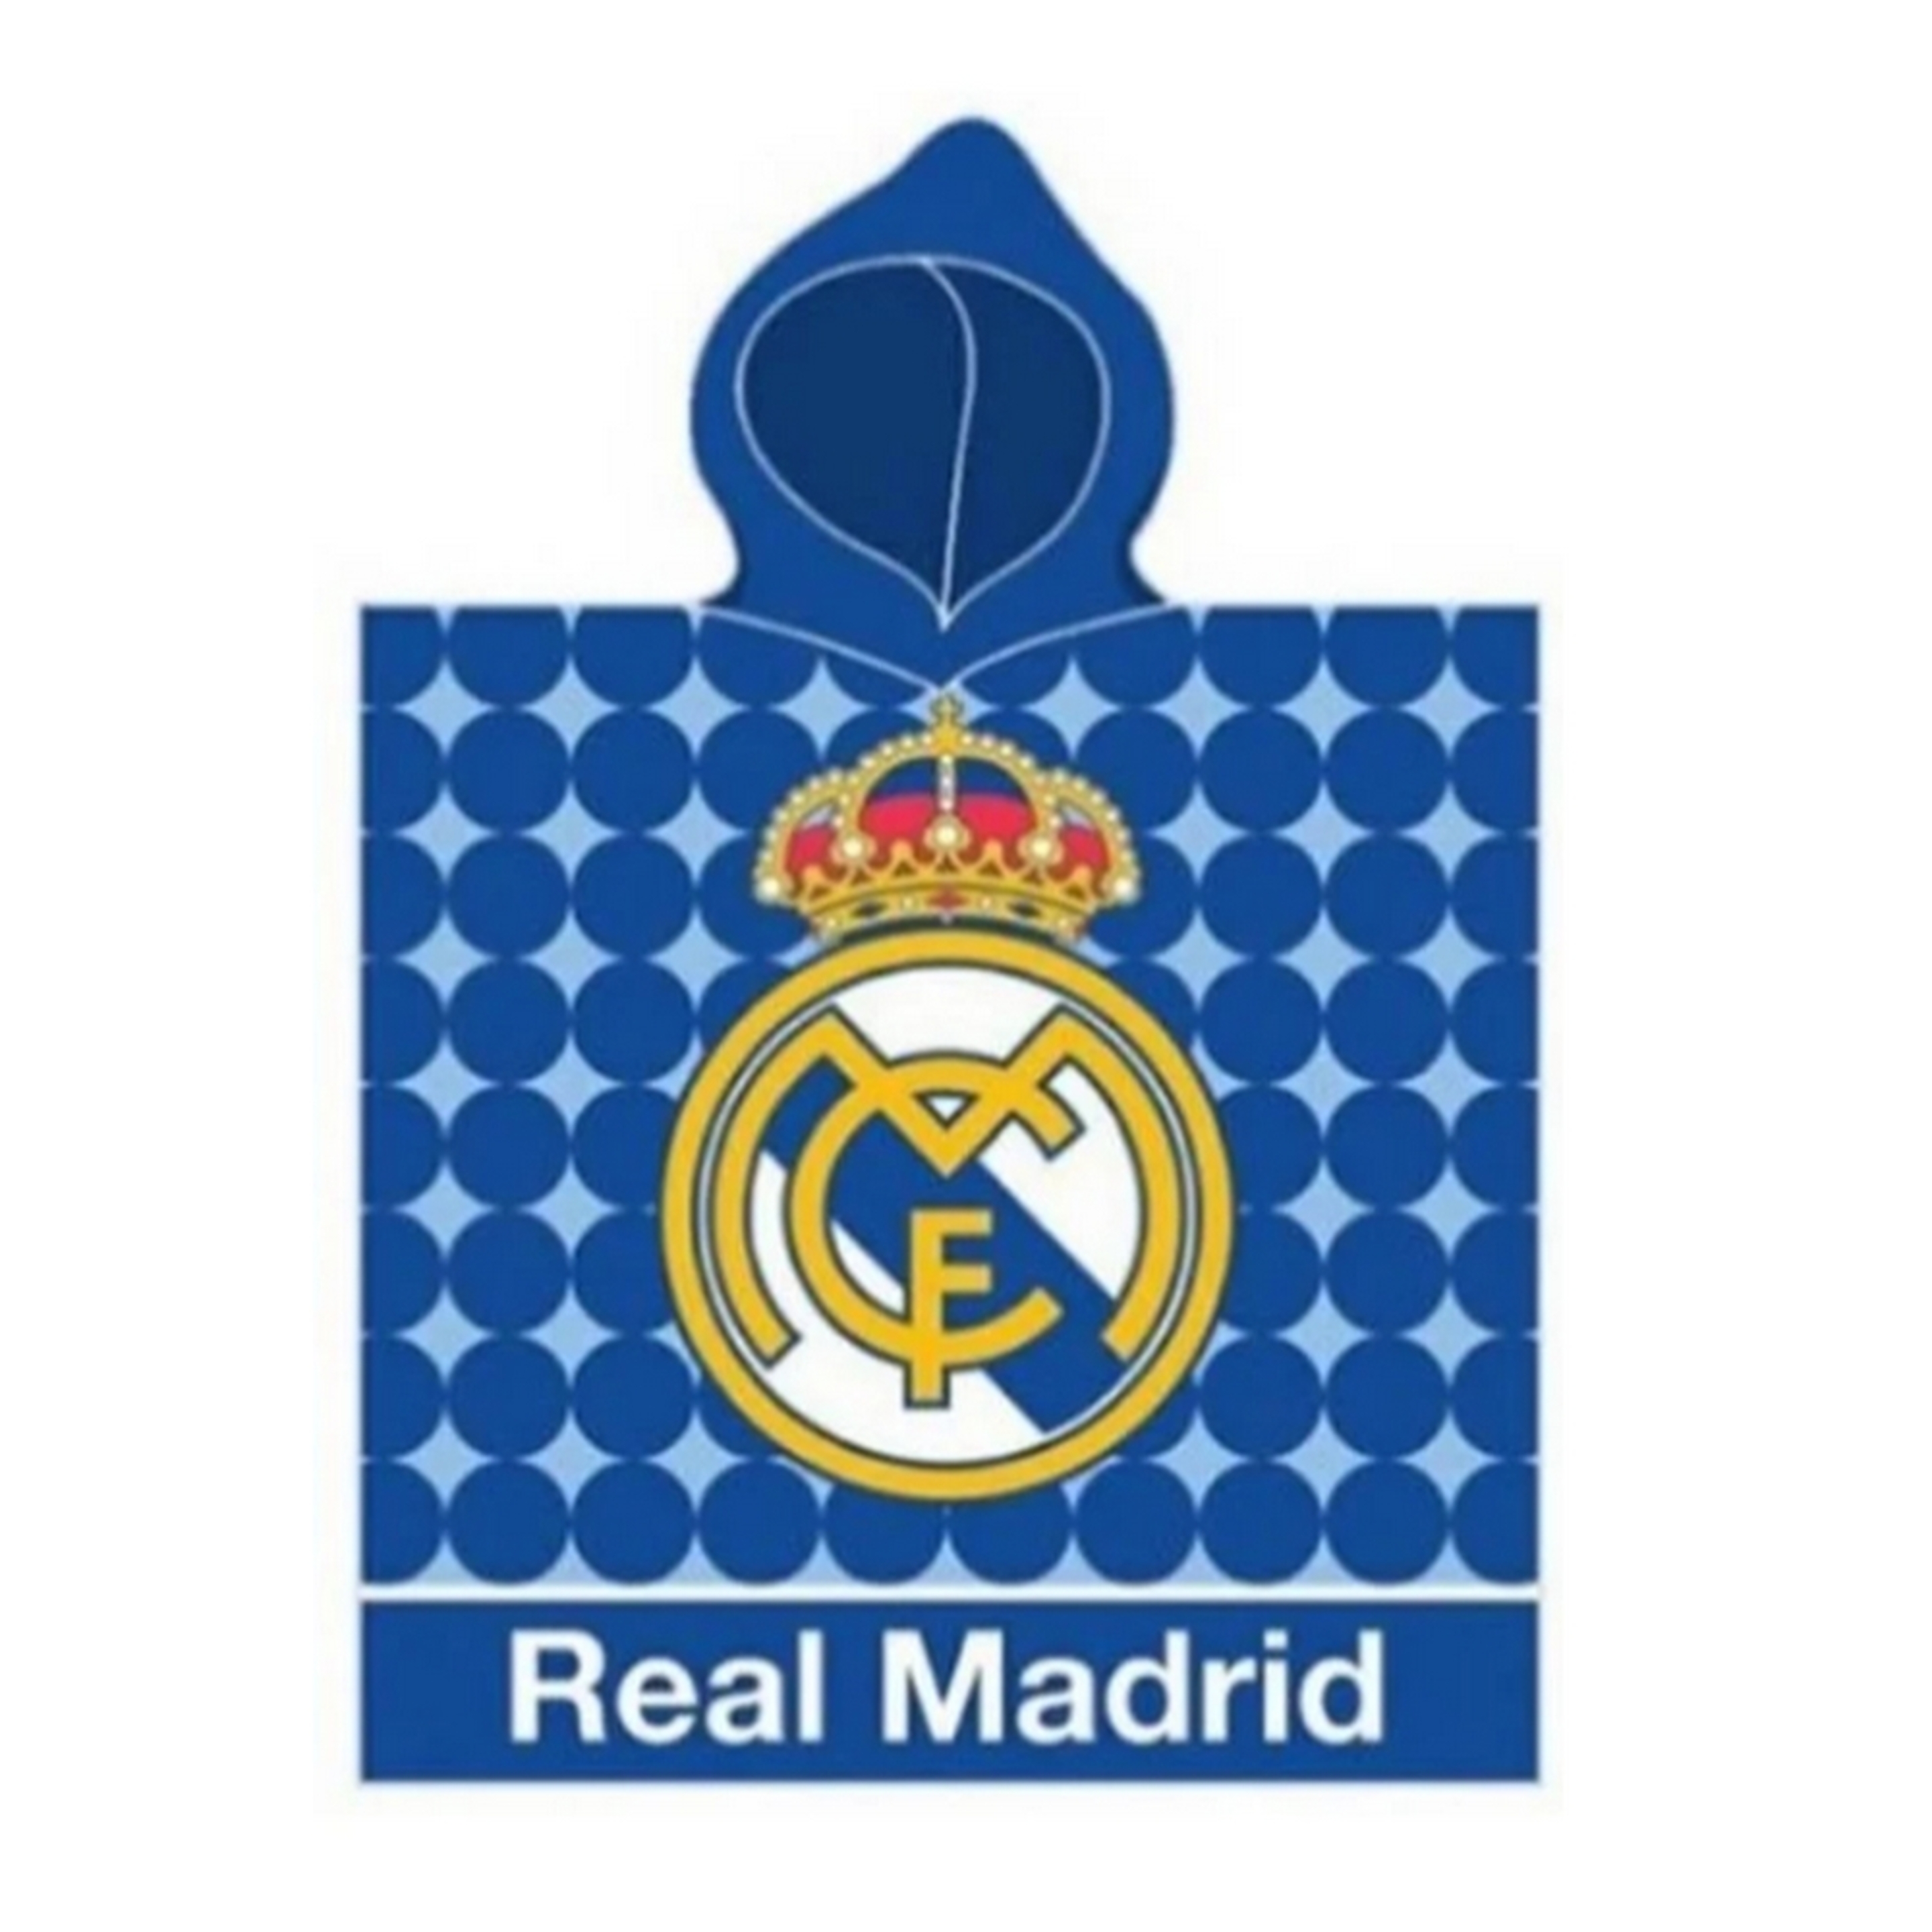 Poncho Real Madrid 71151 - azul - 